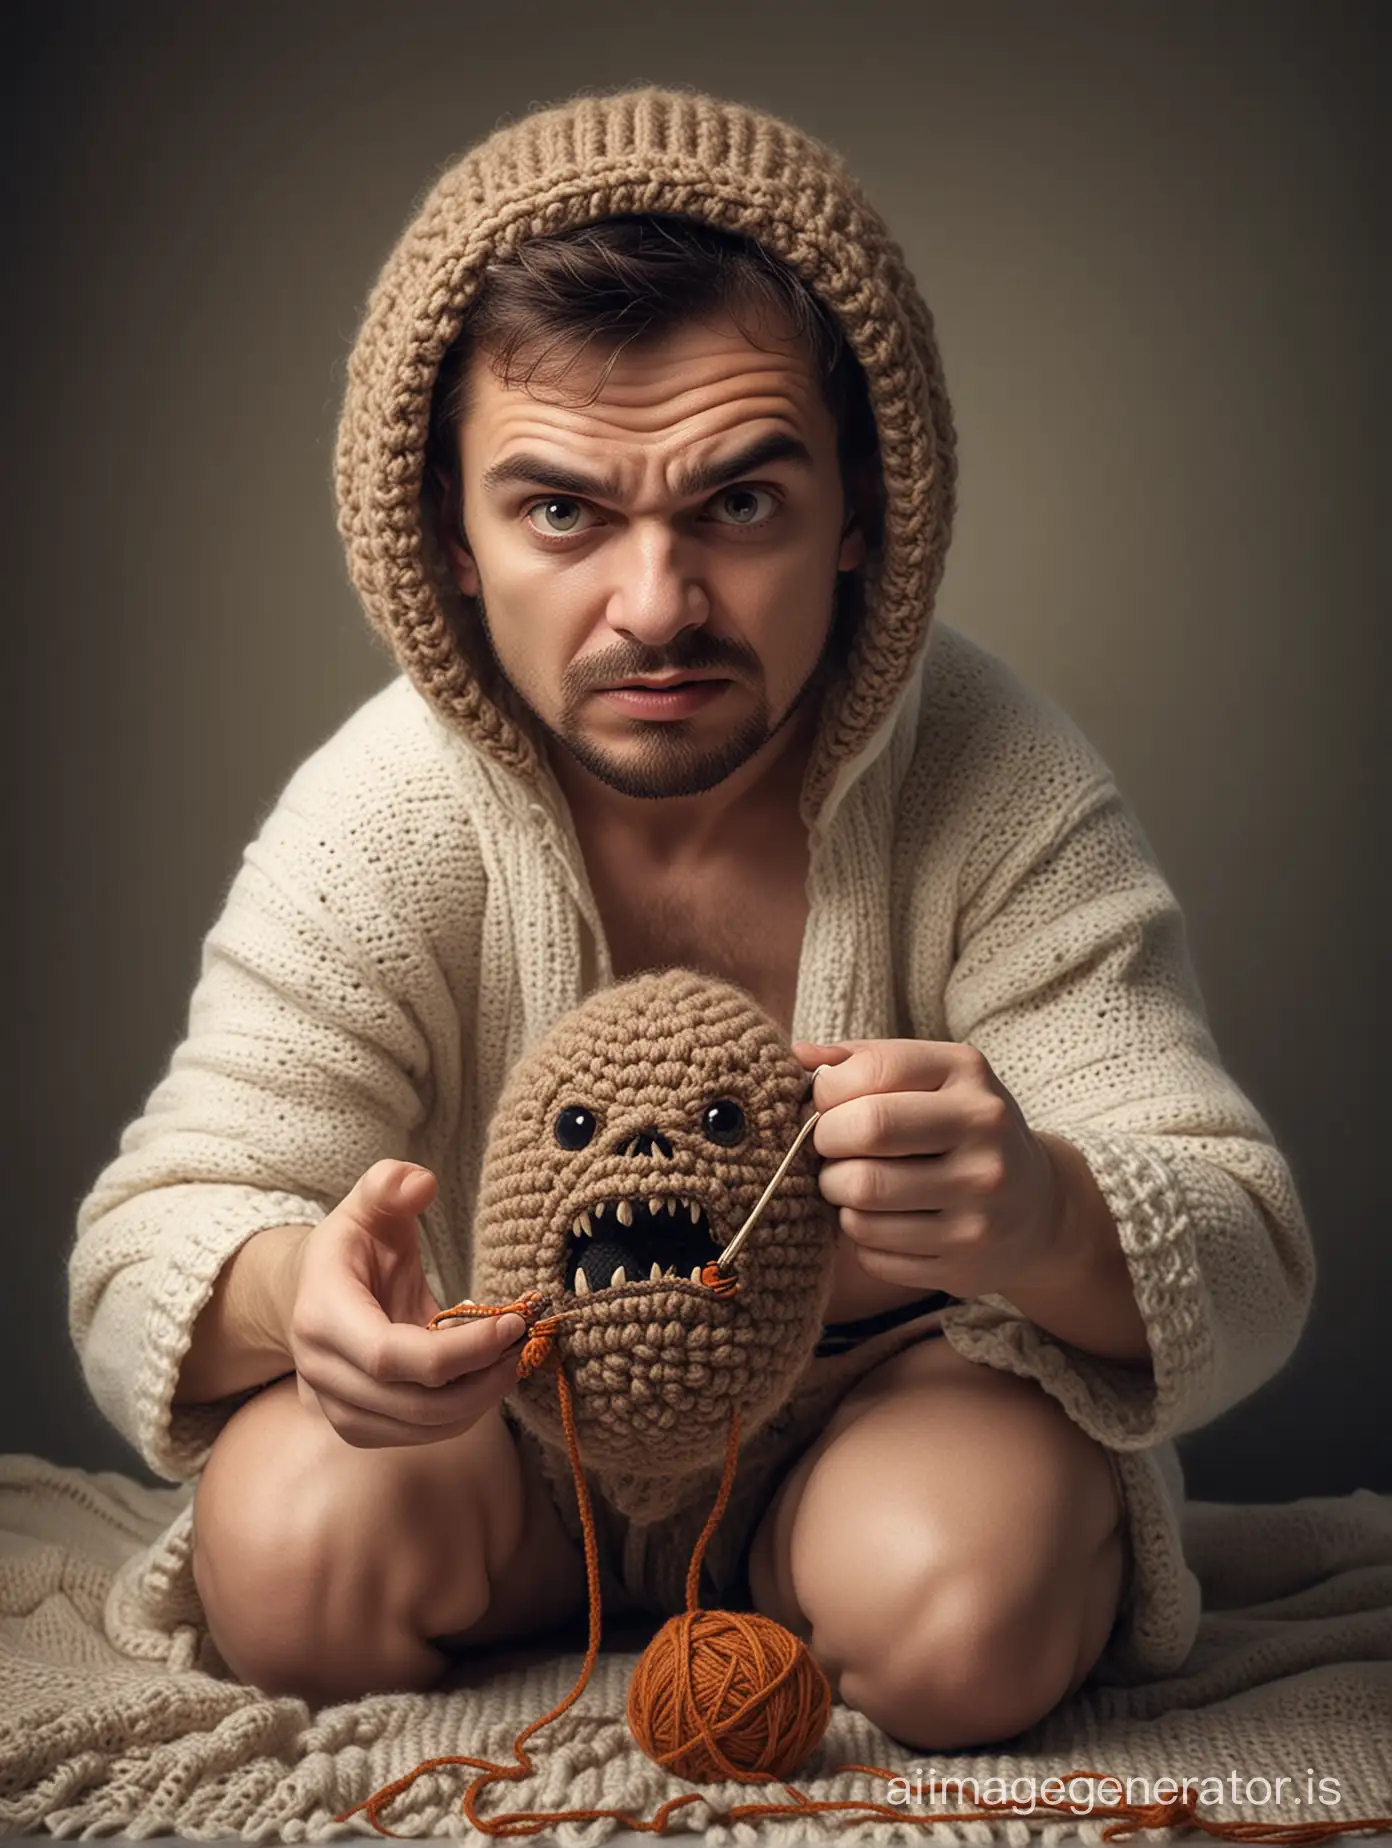 Intimidating-Russian-Man-Crafting-Adorable-Crochet-Creation